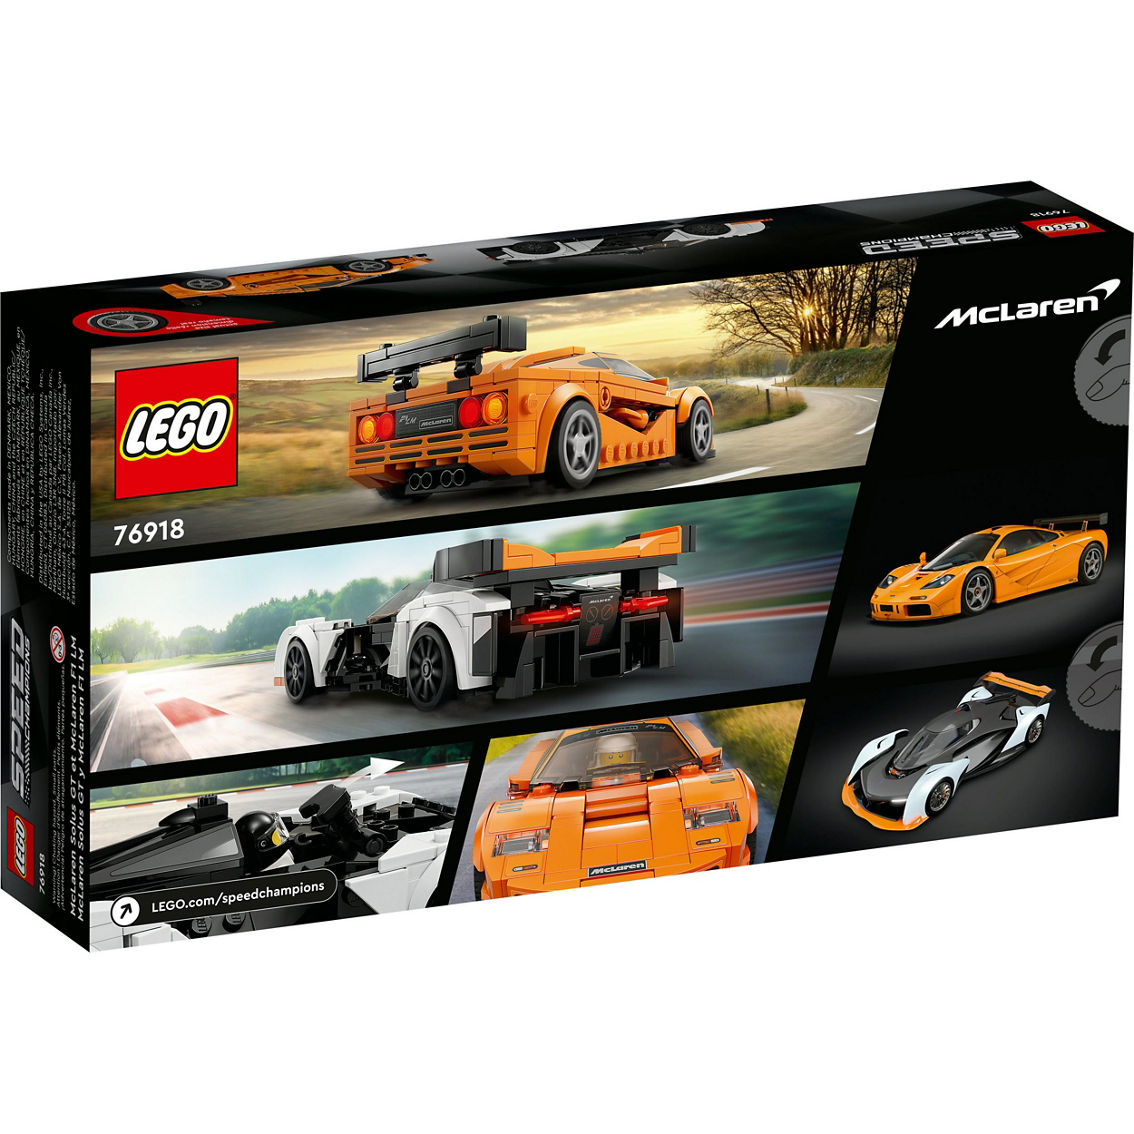 LEGO Speed Champions McLaren Solus GT and McLaren F1 LM 76918 - Image 2 of 7